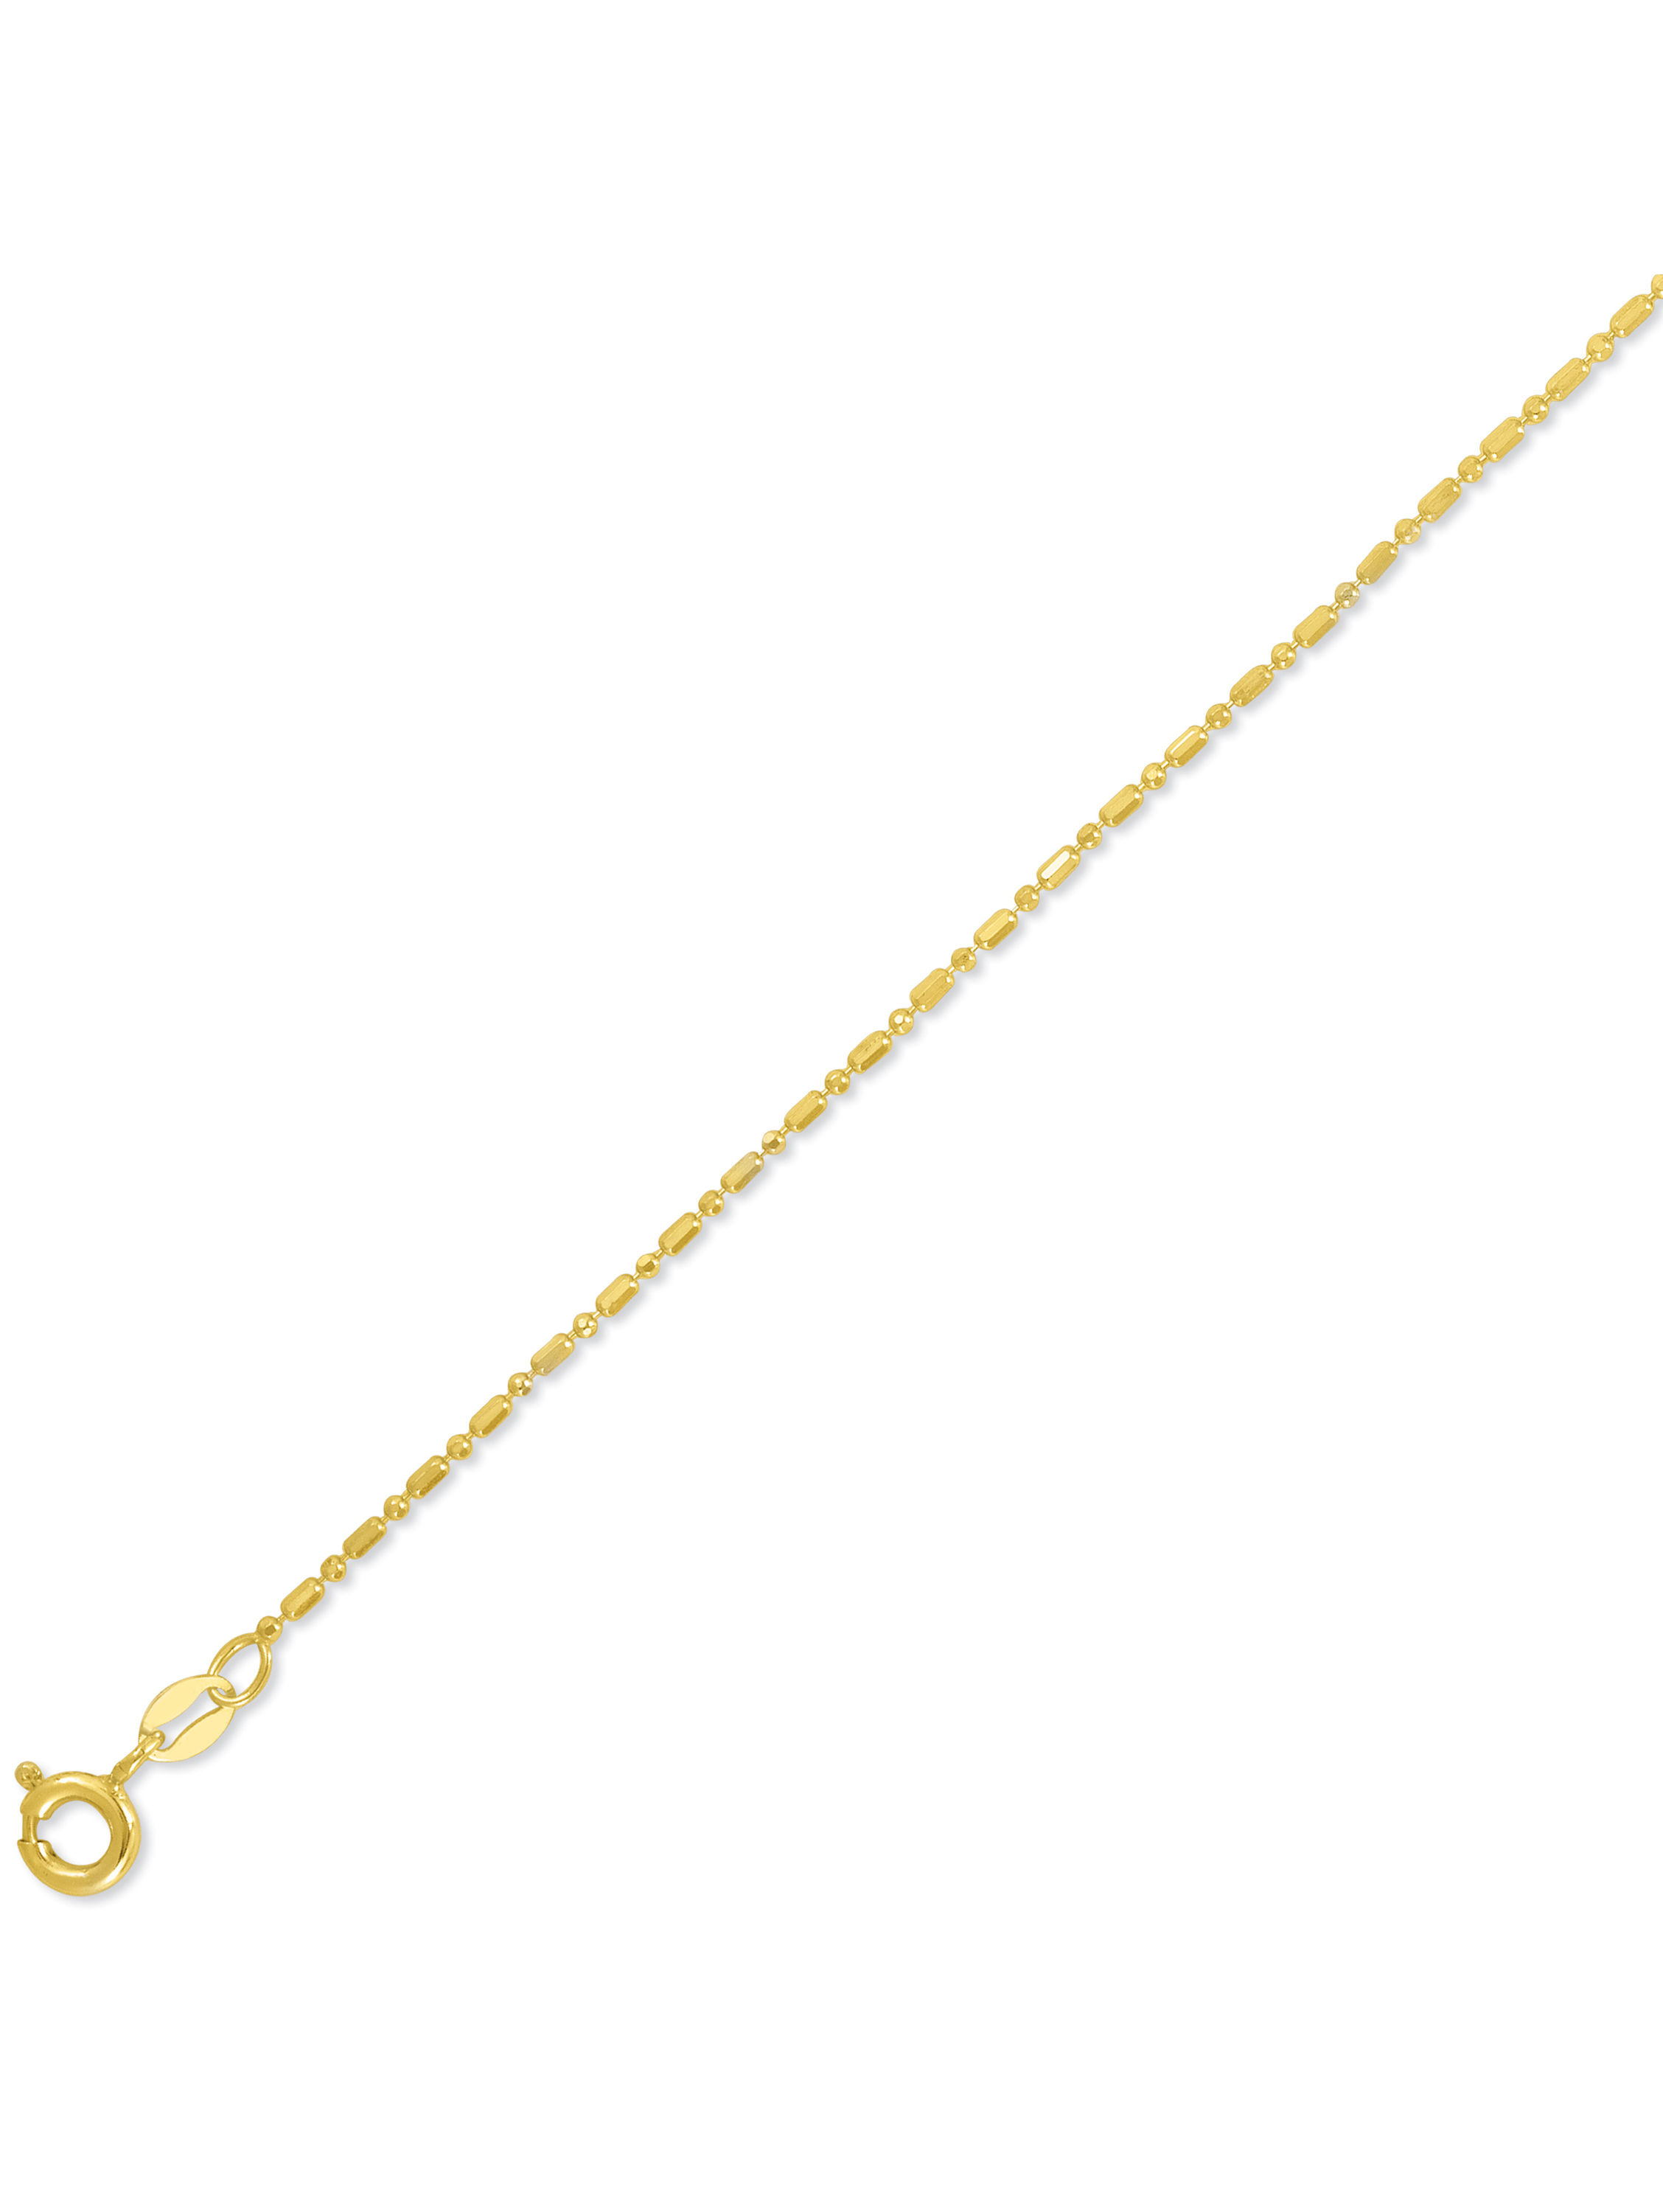 Forever New Diamond Cut 18kt Gold-Plated Bead Bracelet, 8" - image 1 of 4